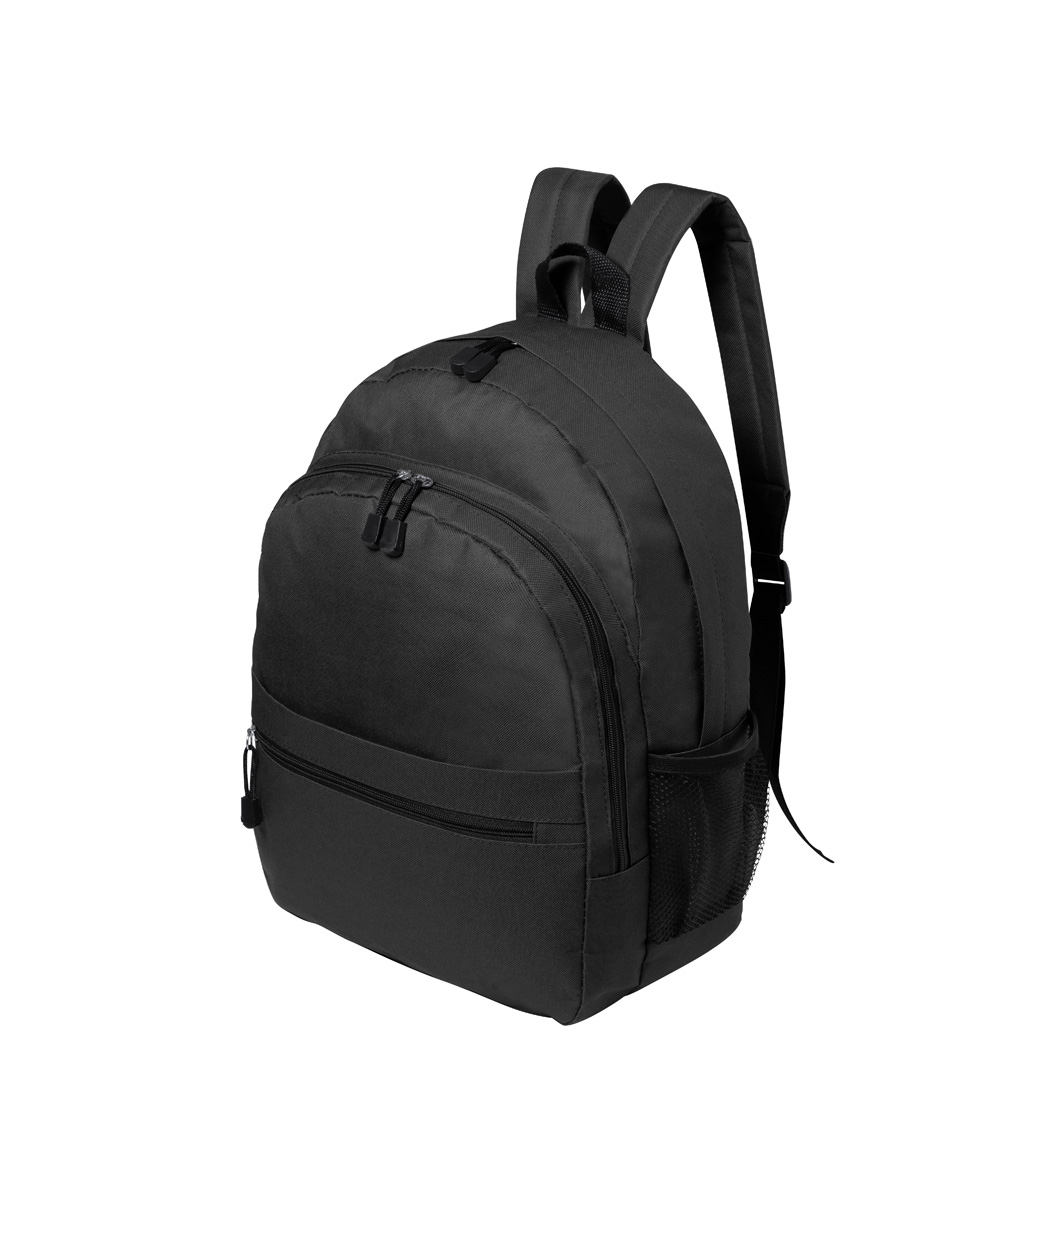 Ventix backpack - black